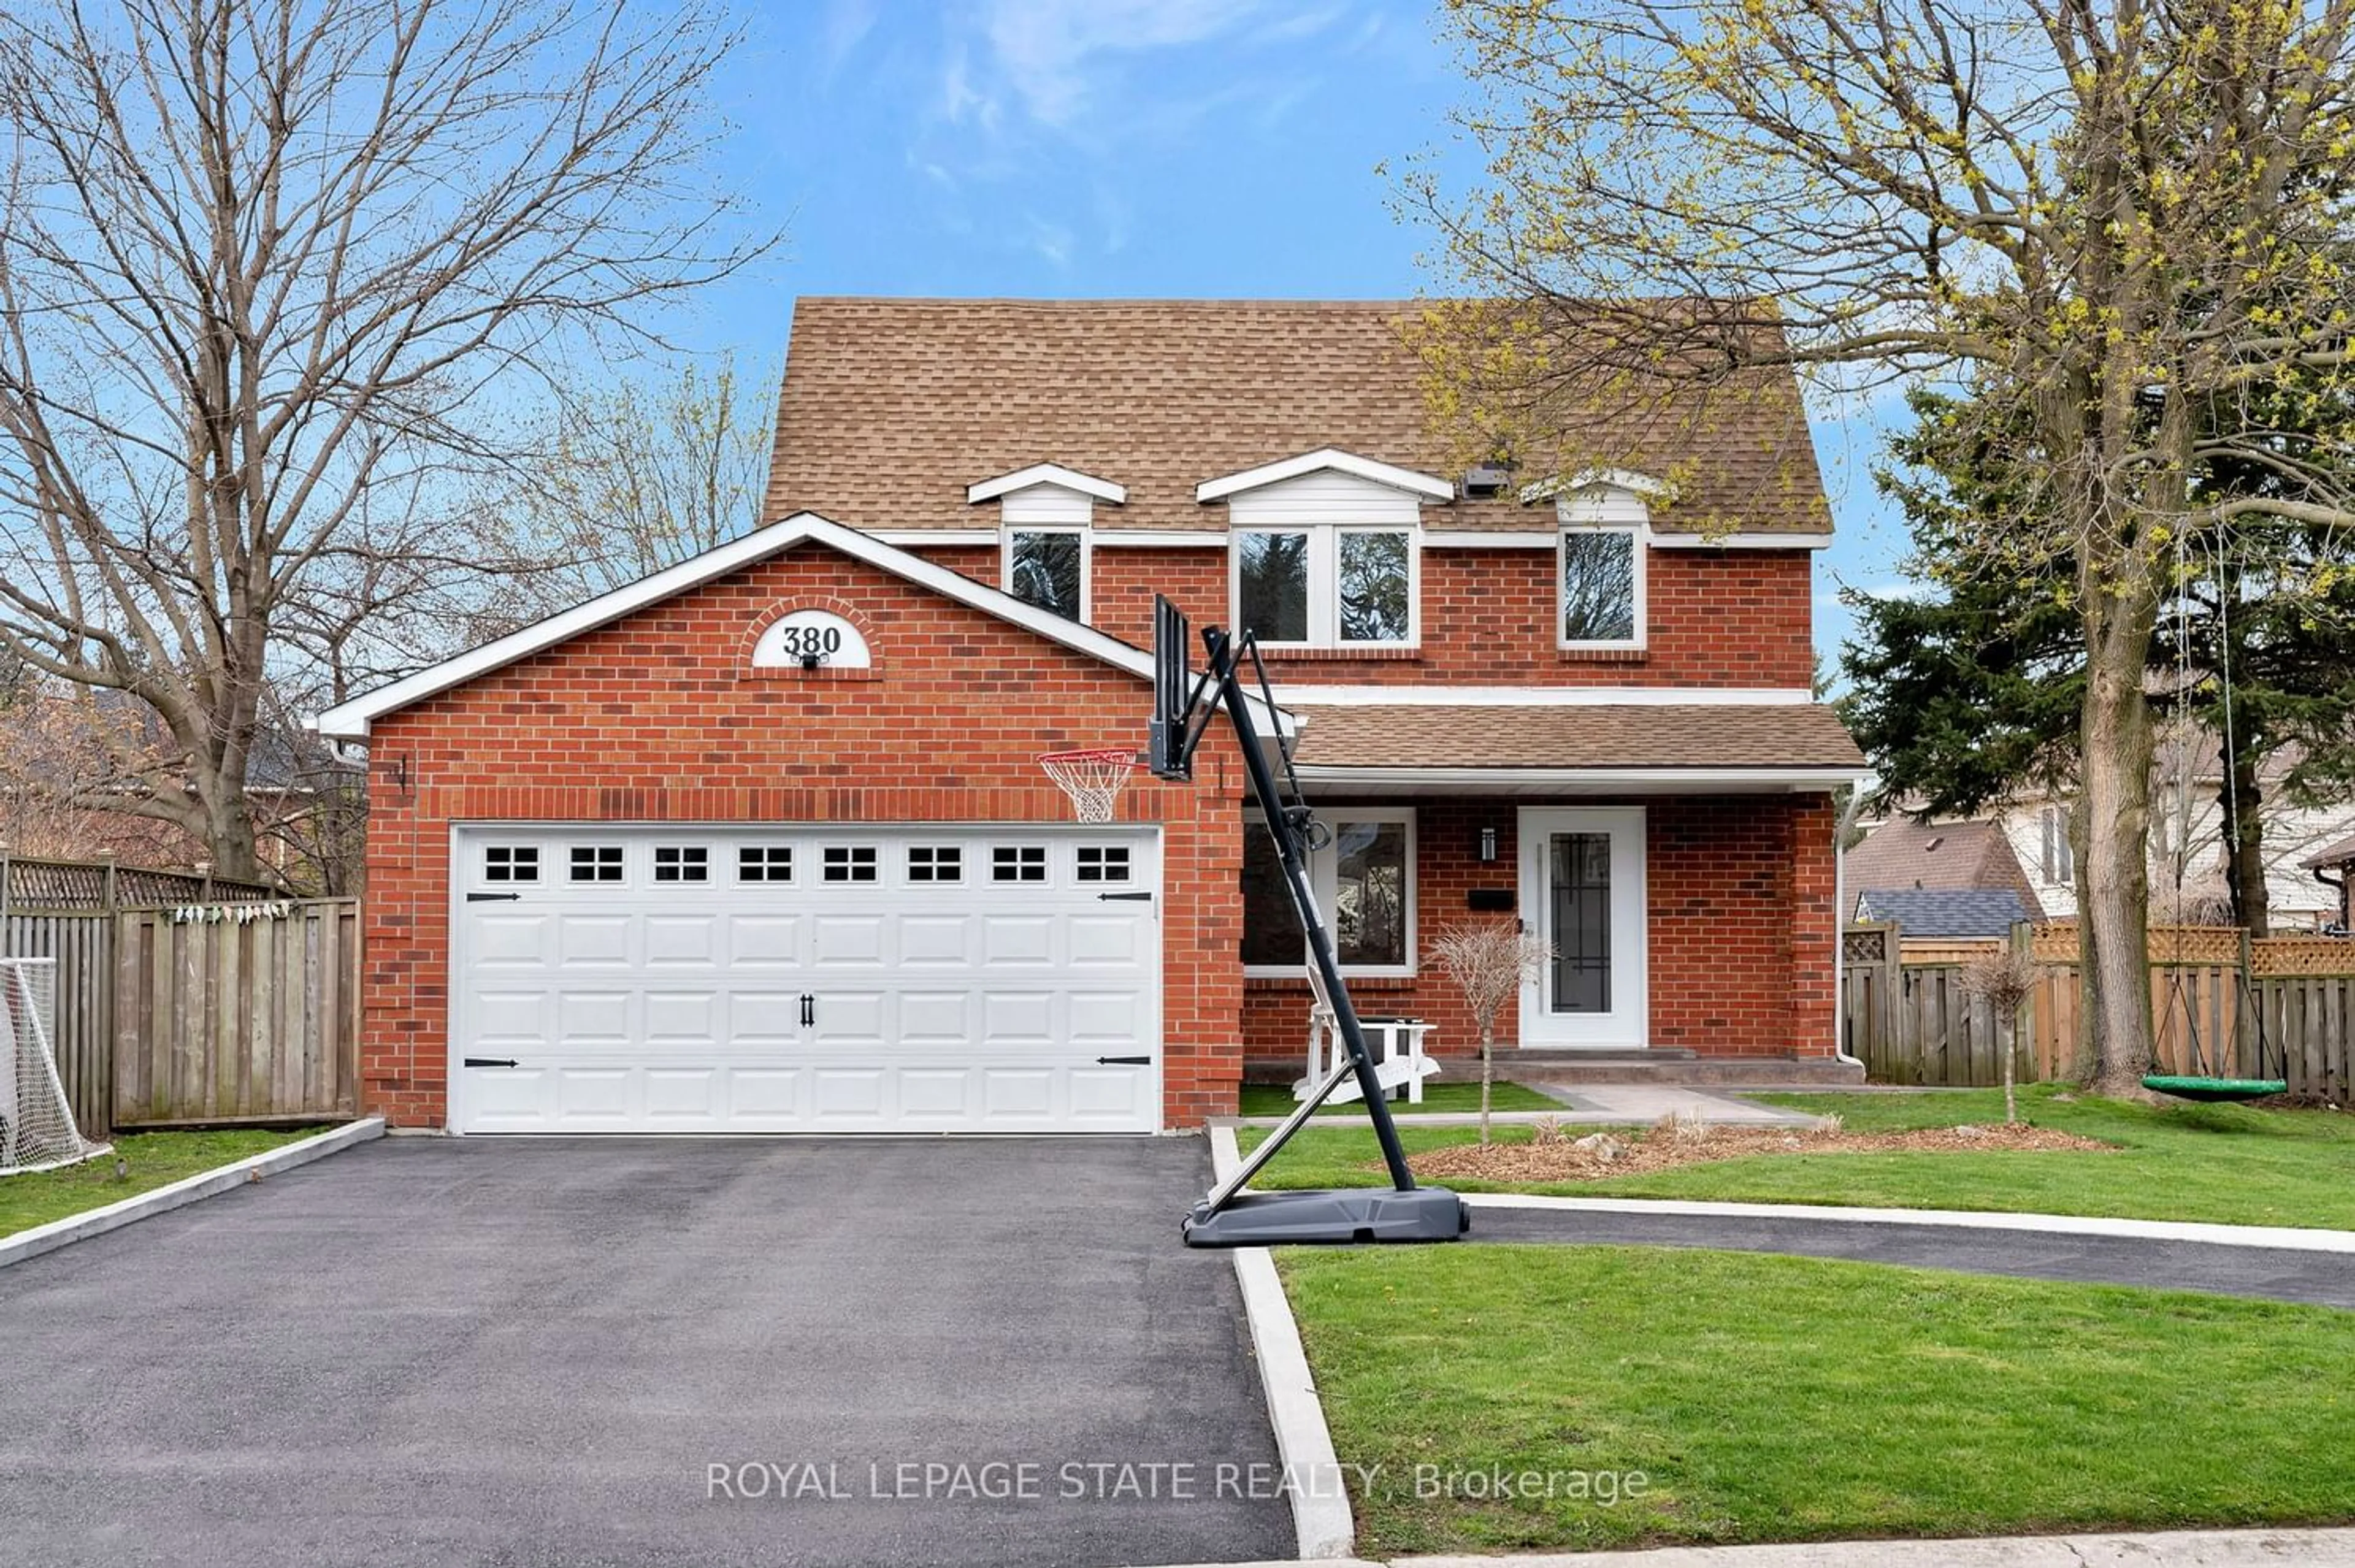 Home with brick exterior material for 380 Melanie Cres, Hamilton Ontario L9G 4B2